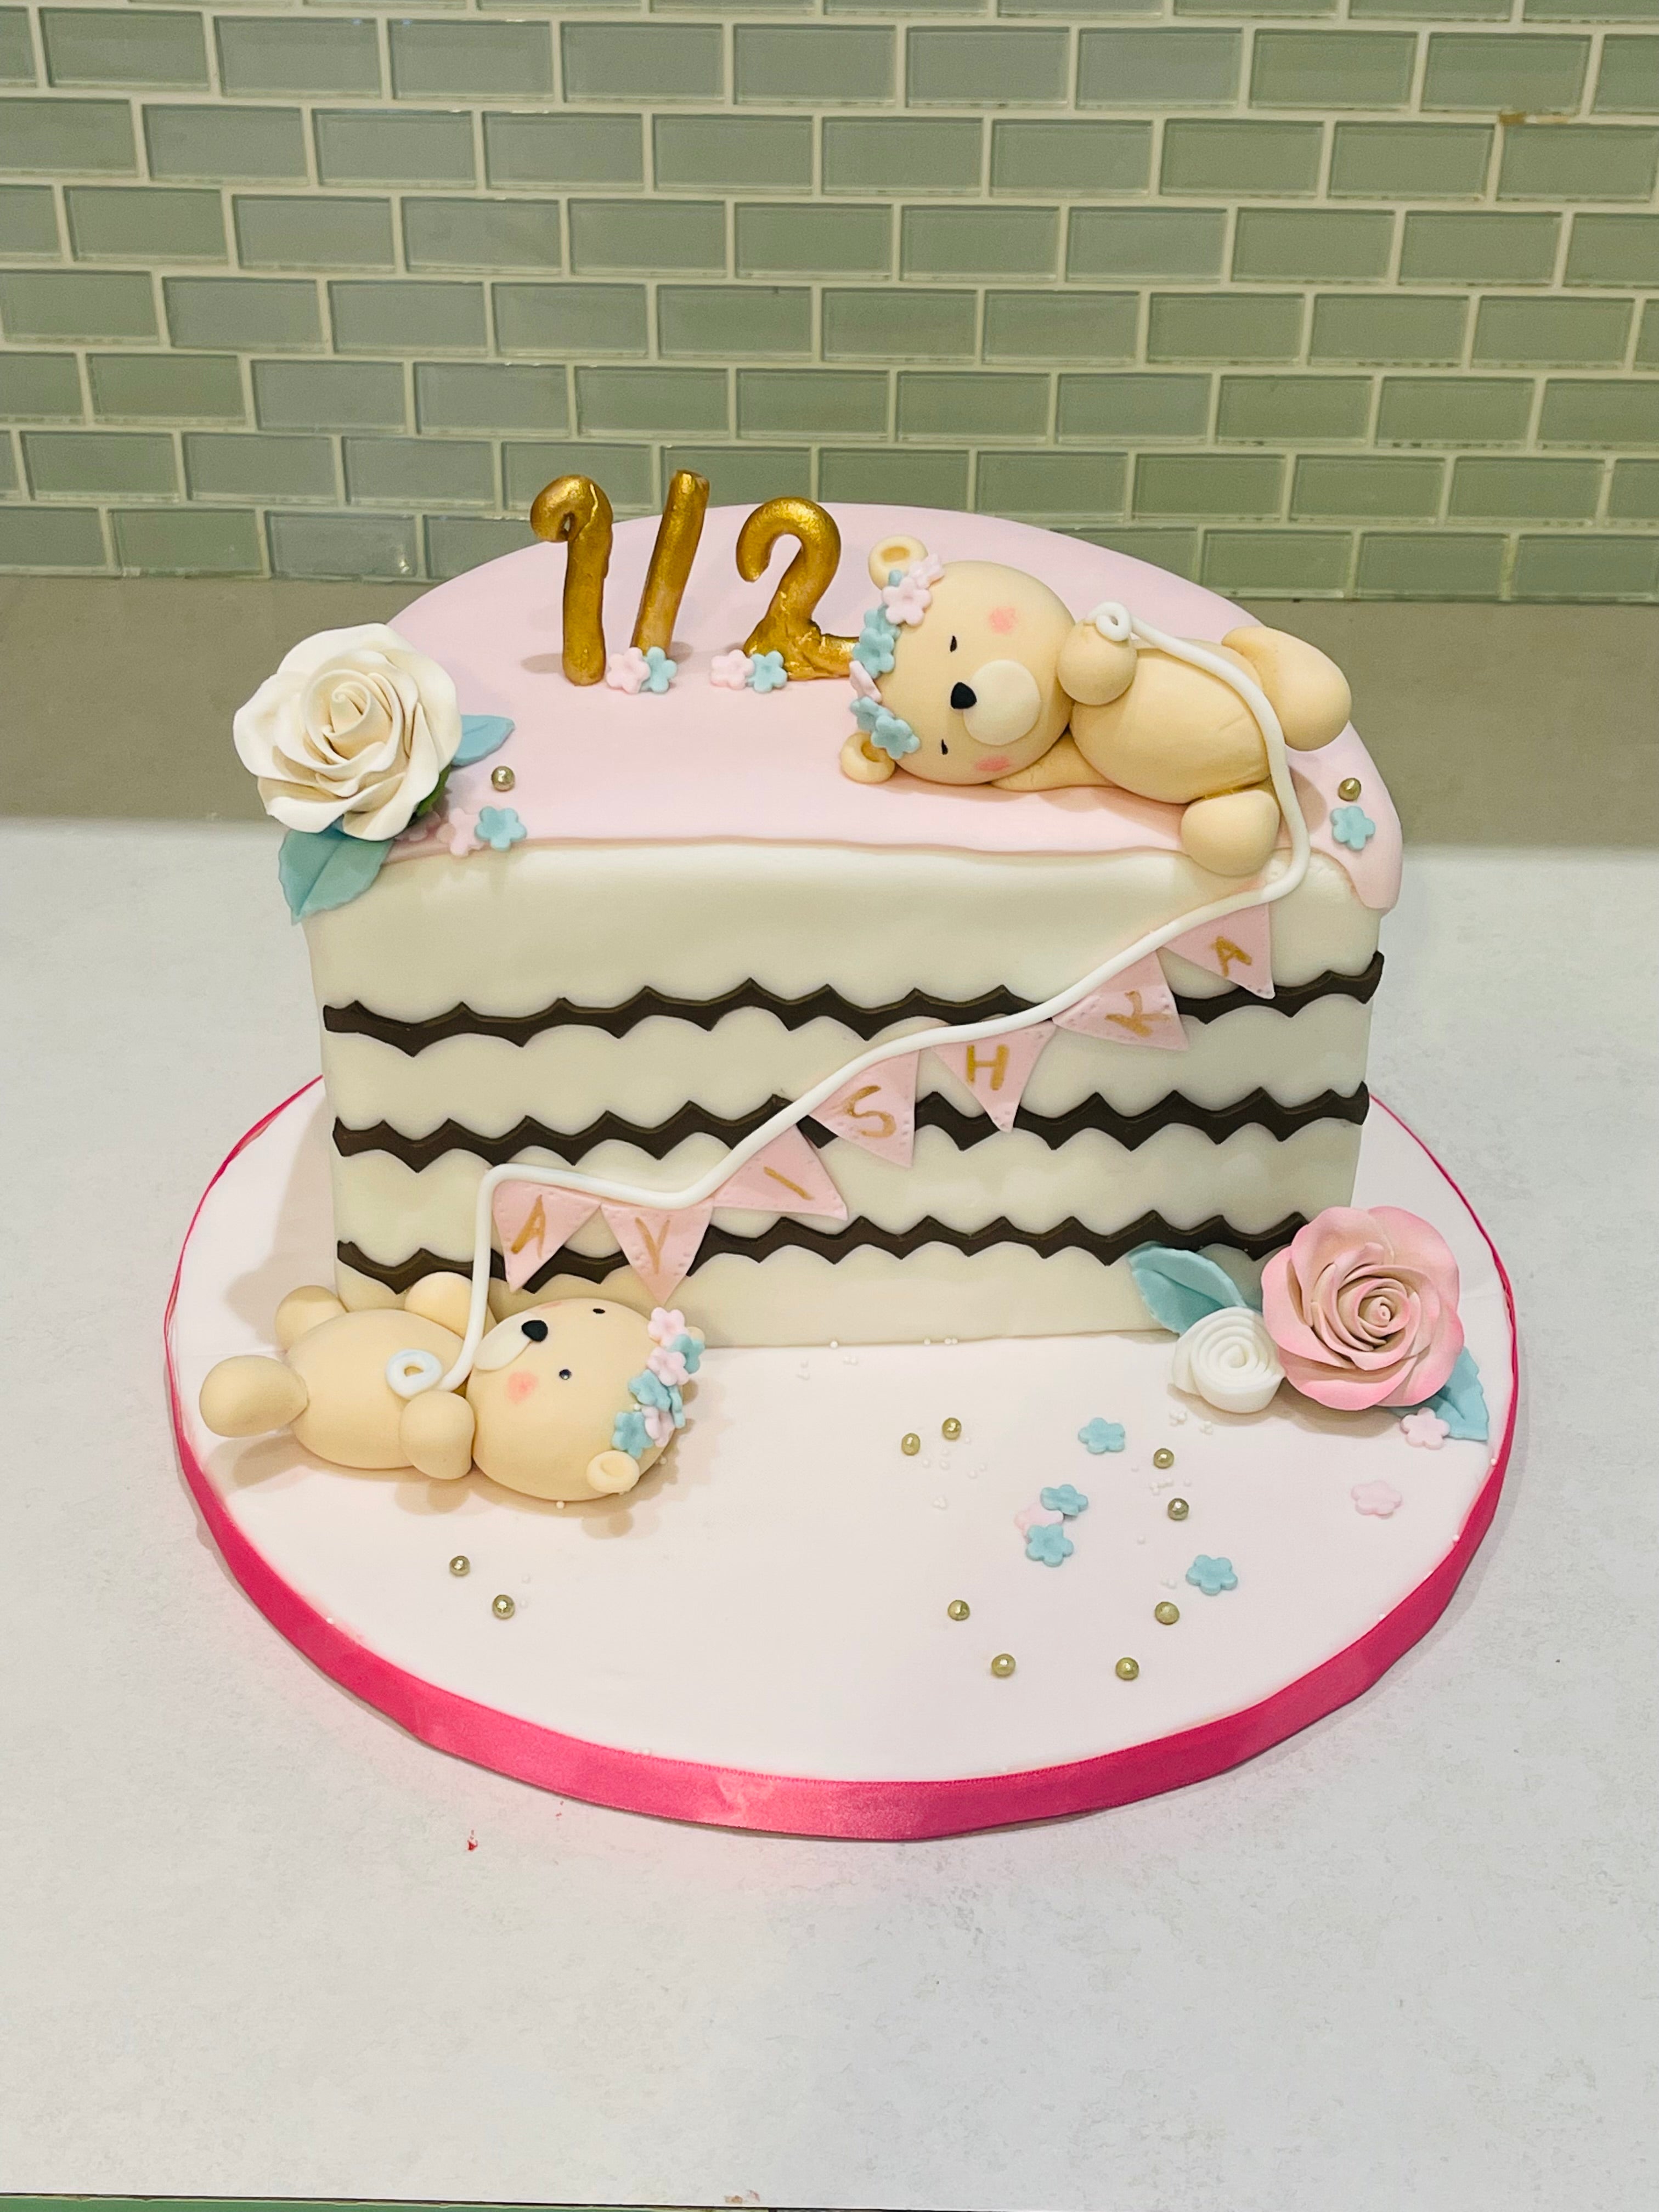 ALL Birthday Cakes tagged "half-birthday" - Rashmi's Bakery